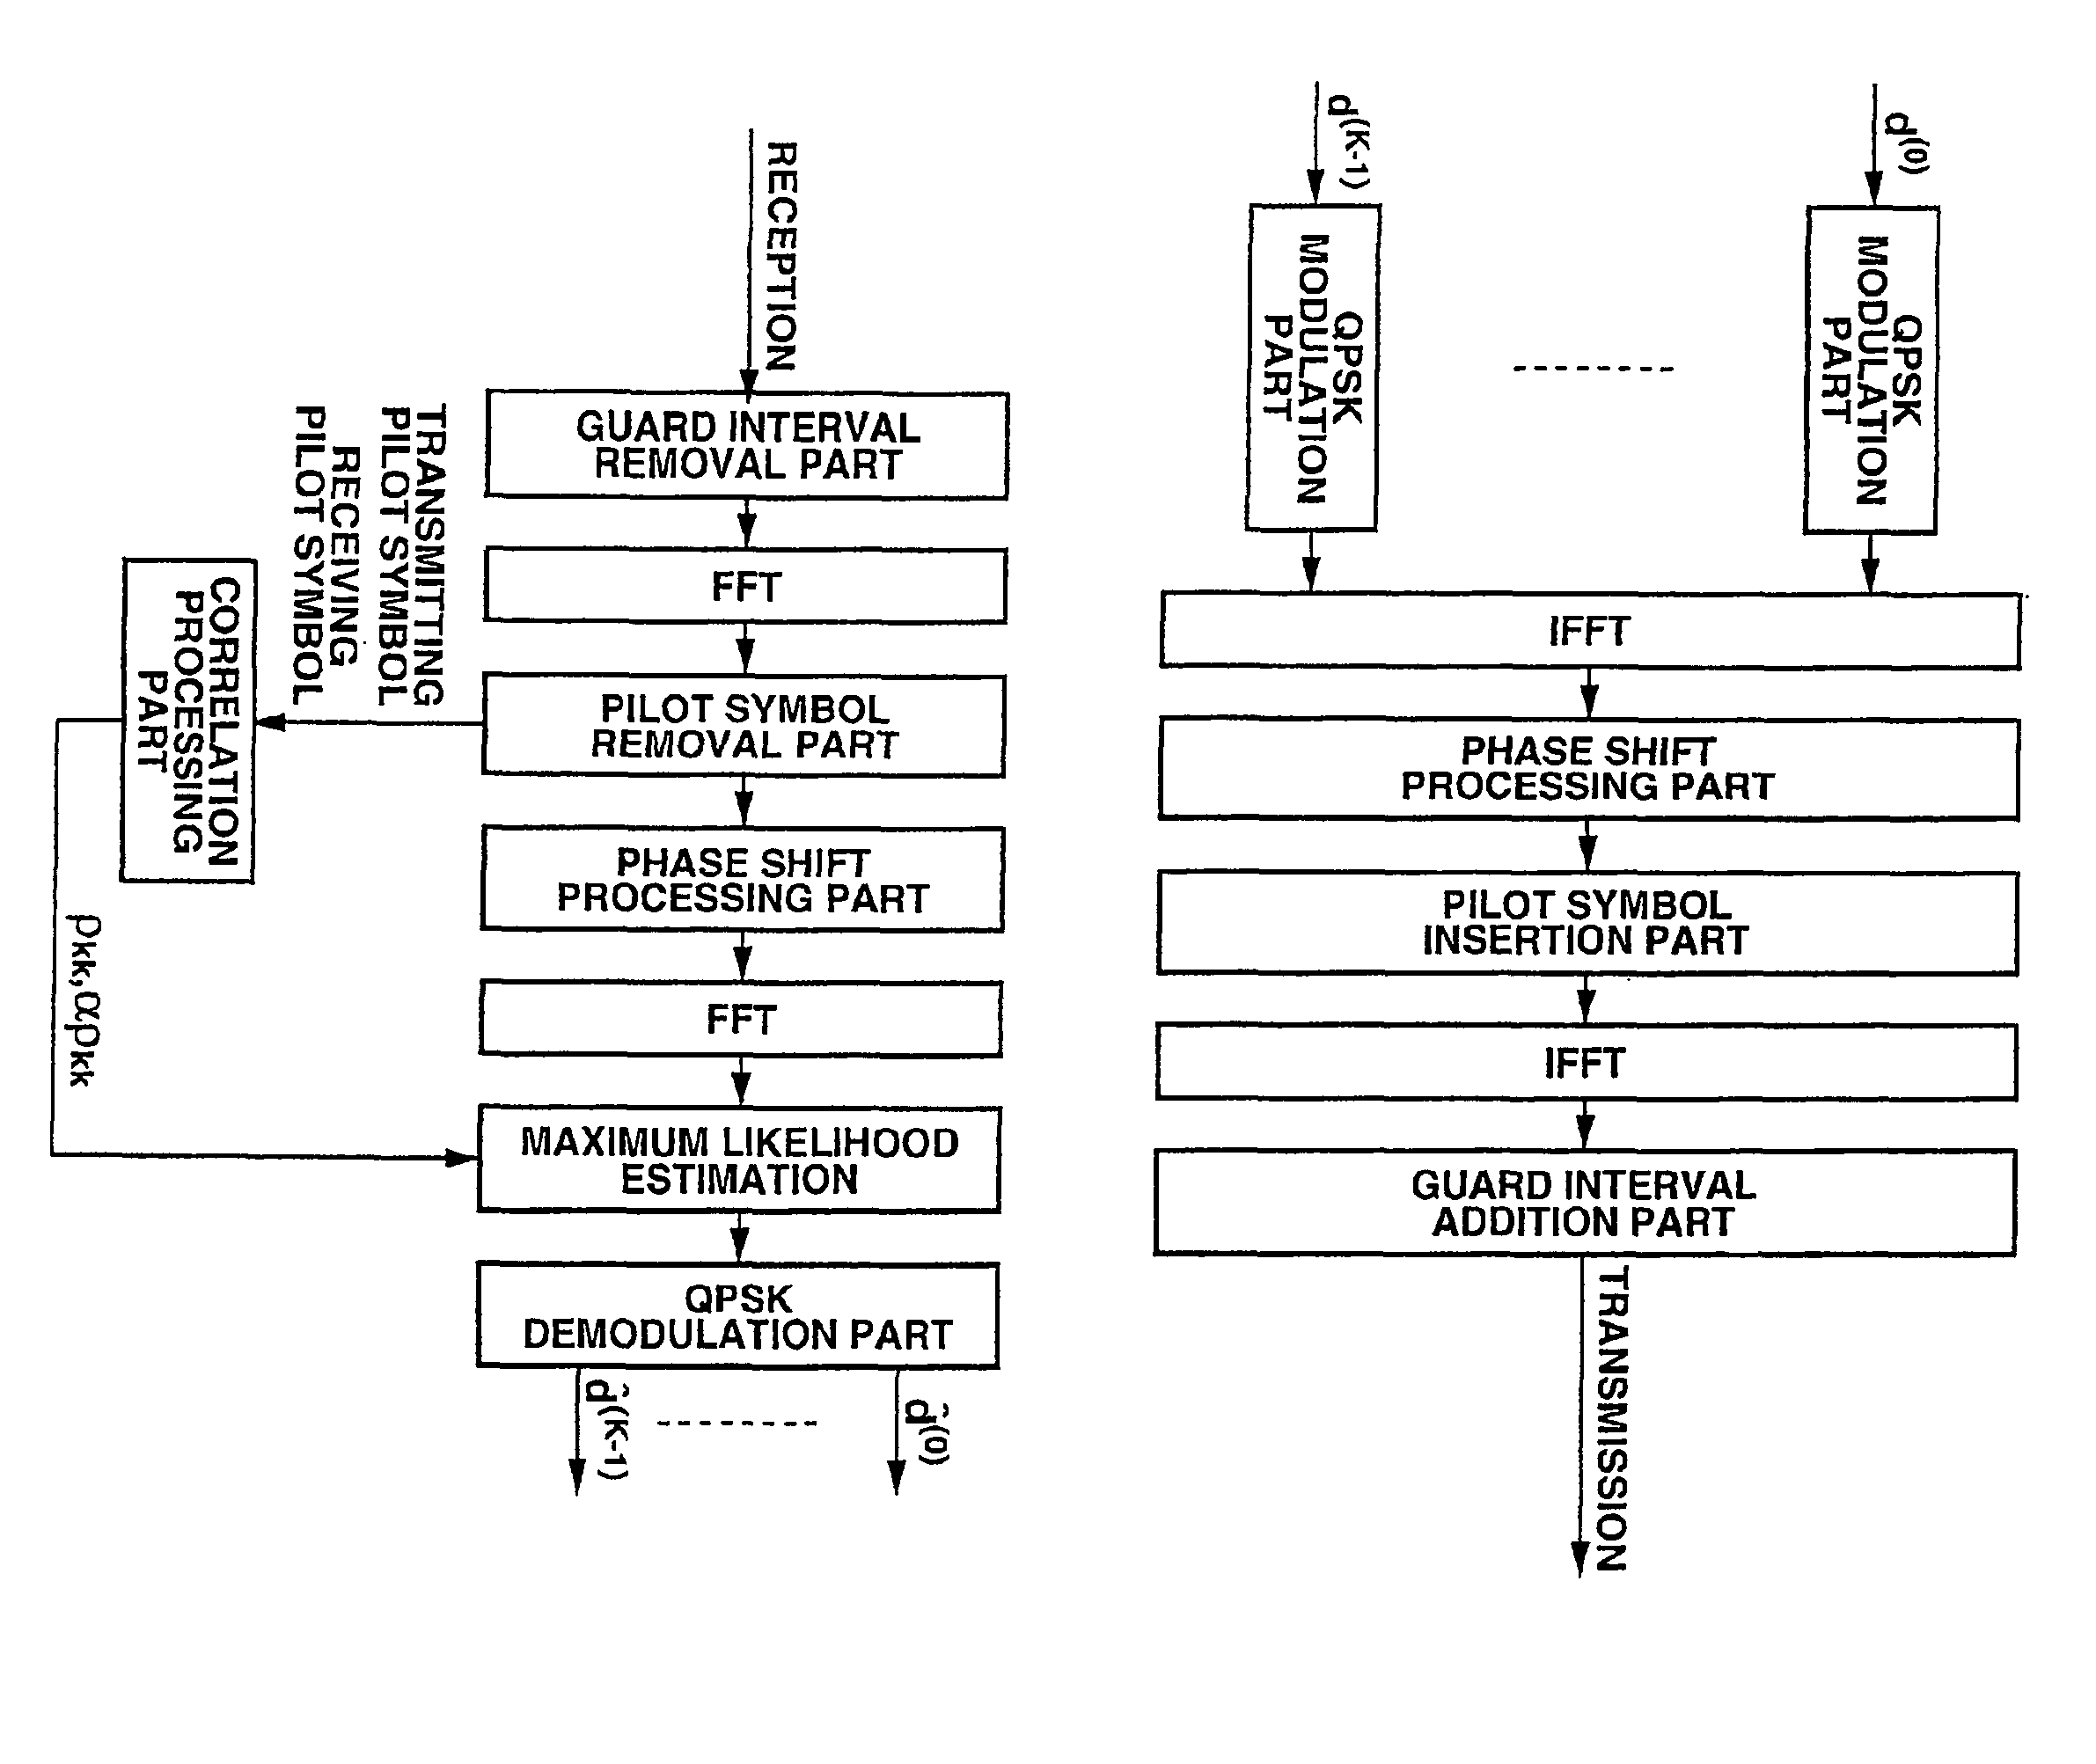 MC-CDMA system, transmitter and receiver